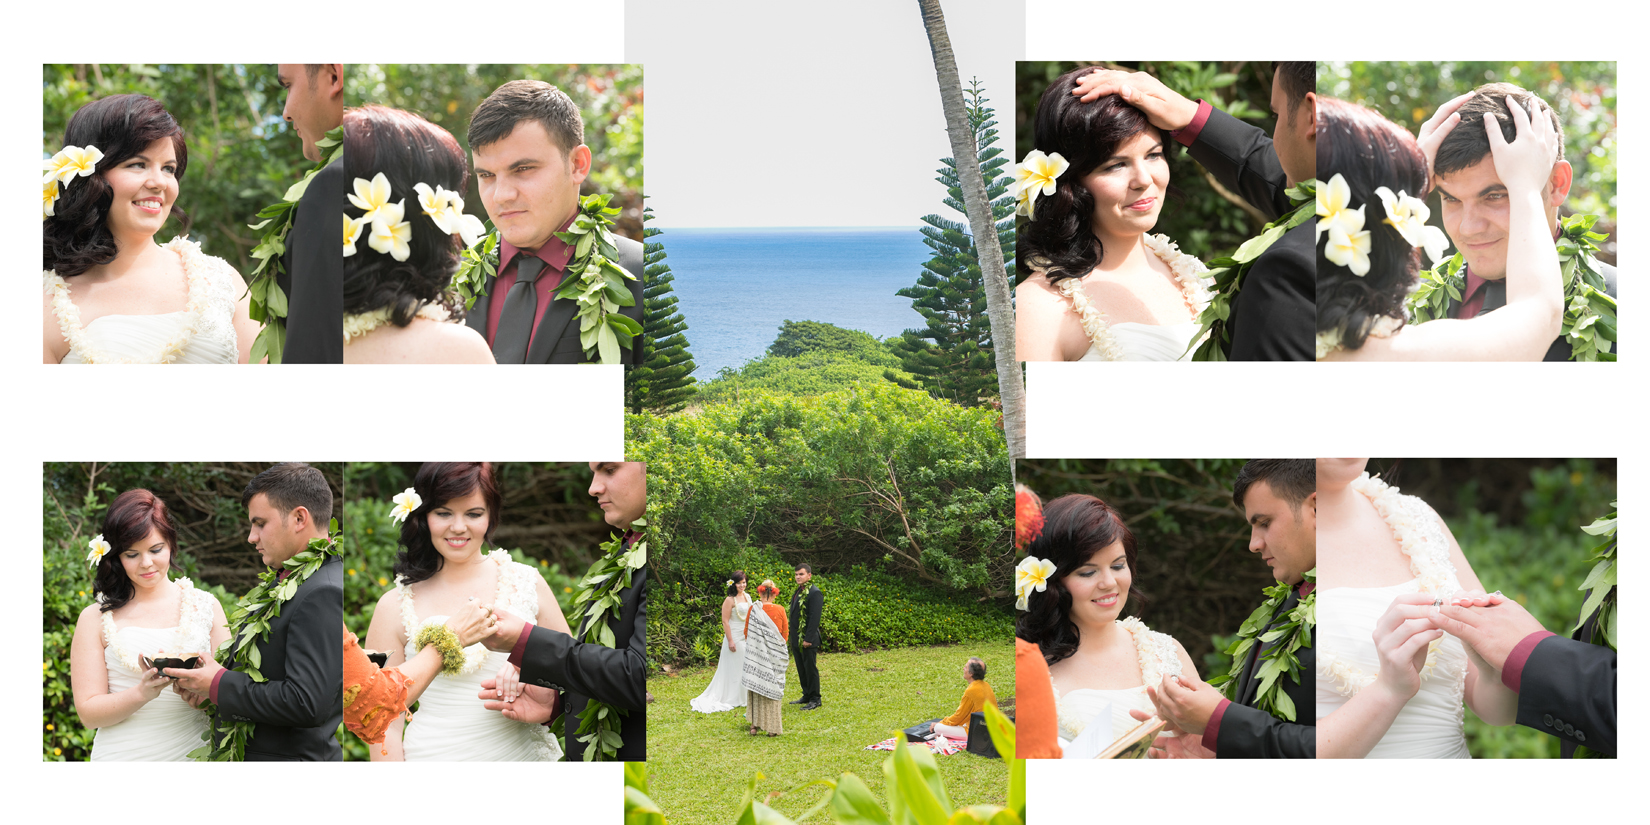 Sample Album Design of Maui Wedding Photography at Panoramic Tropical Setting in Haiku